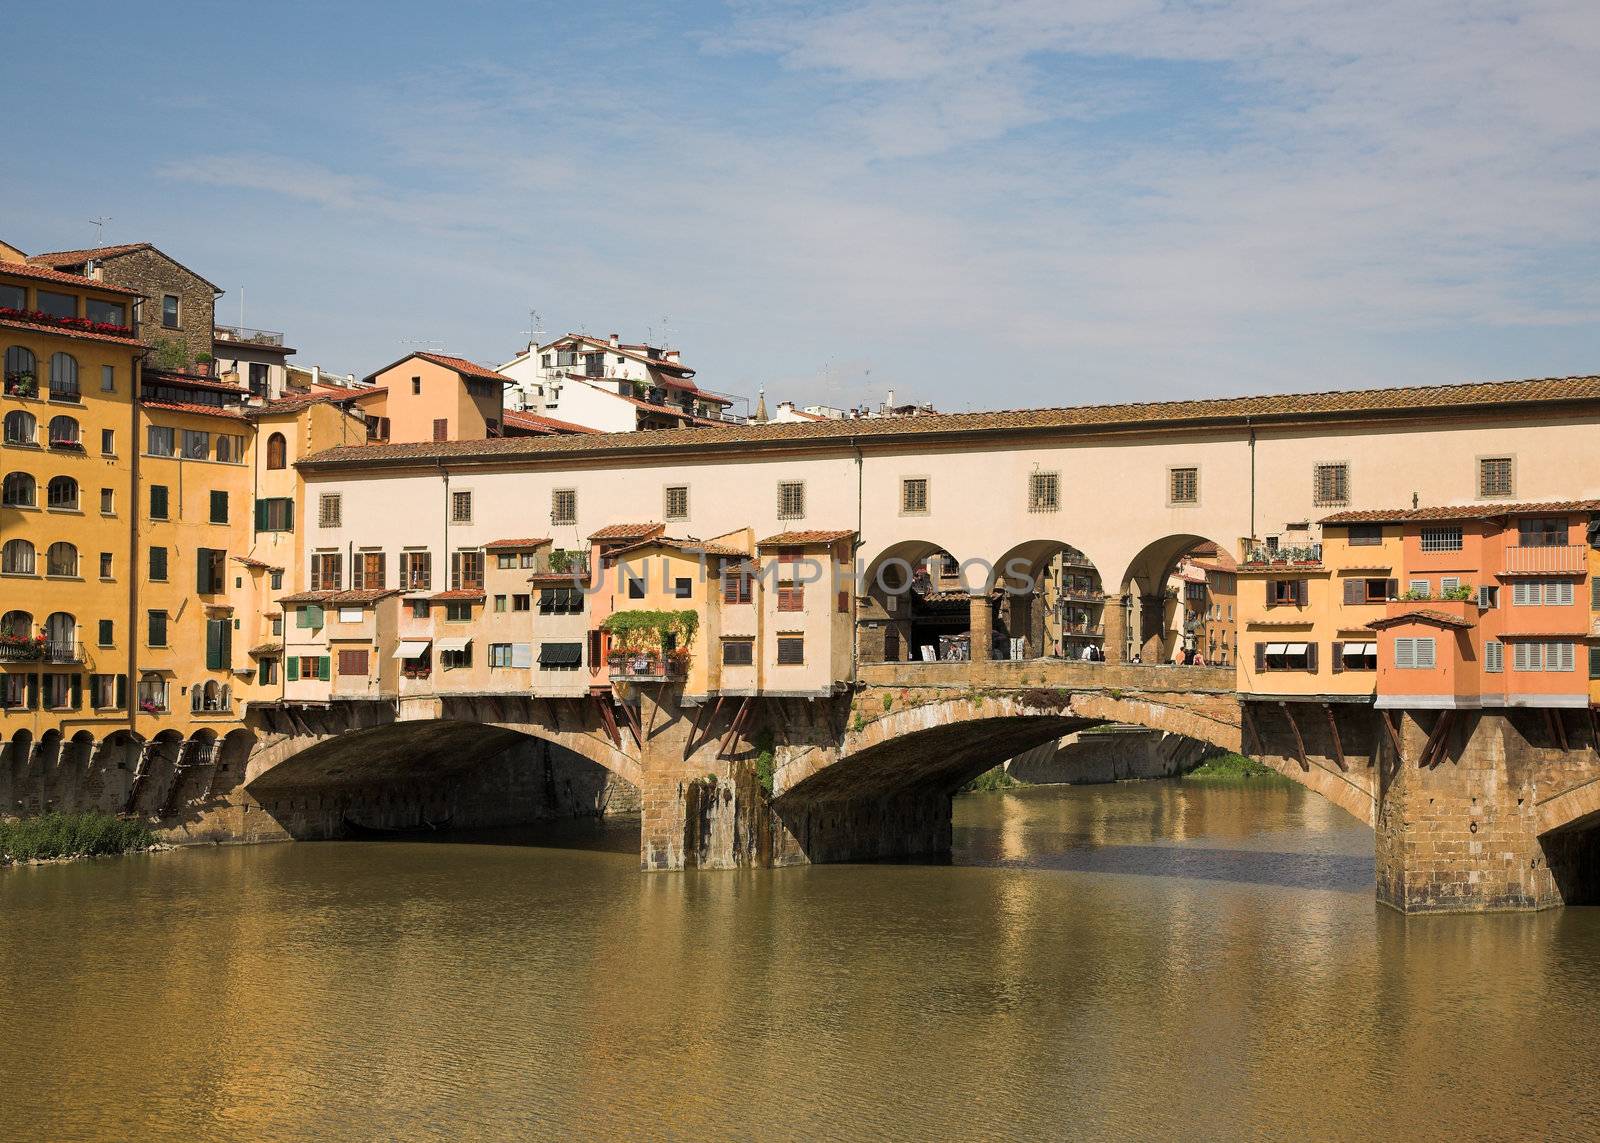 The Ponte Vecchio bridge across the River Arno in Florence.